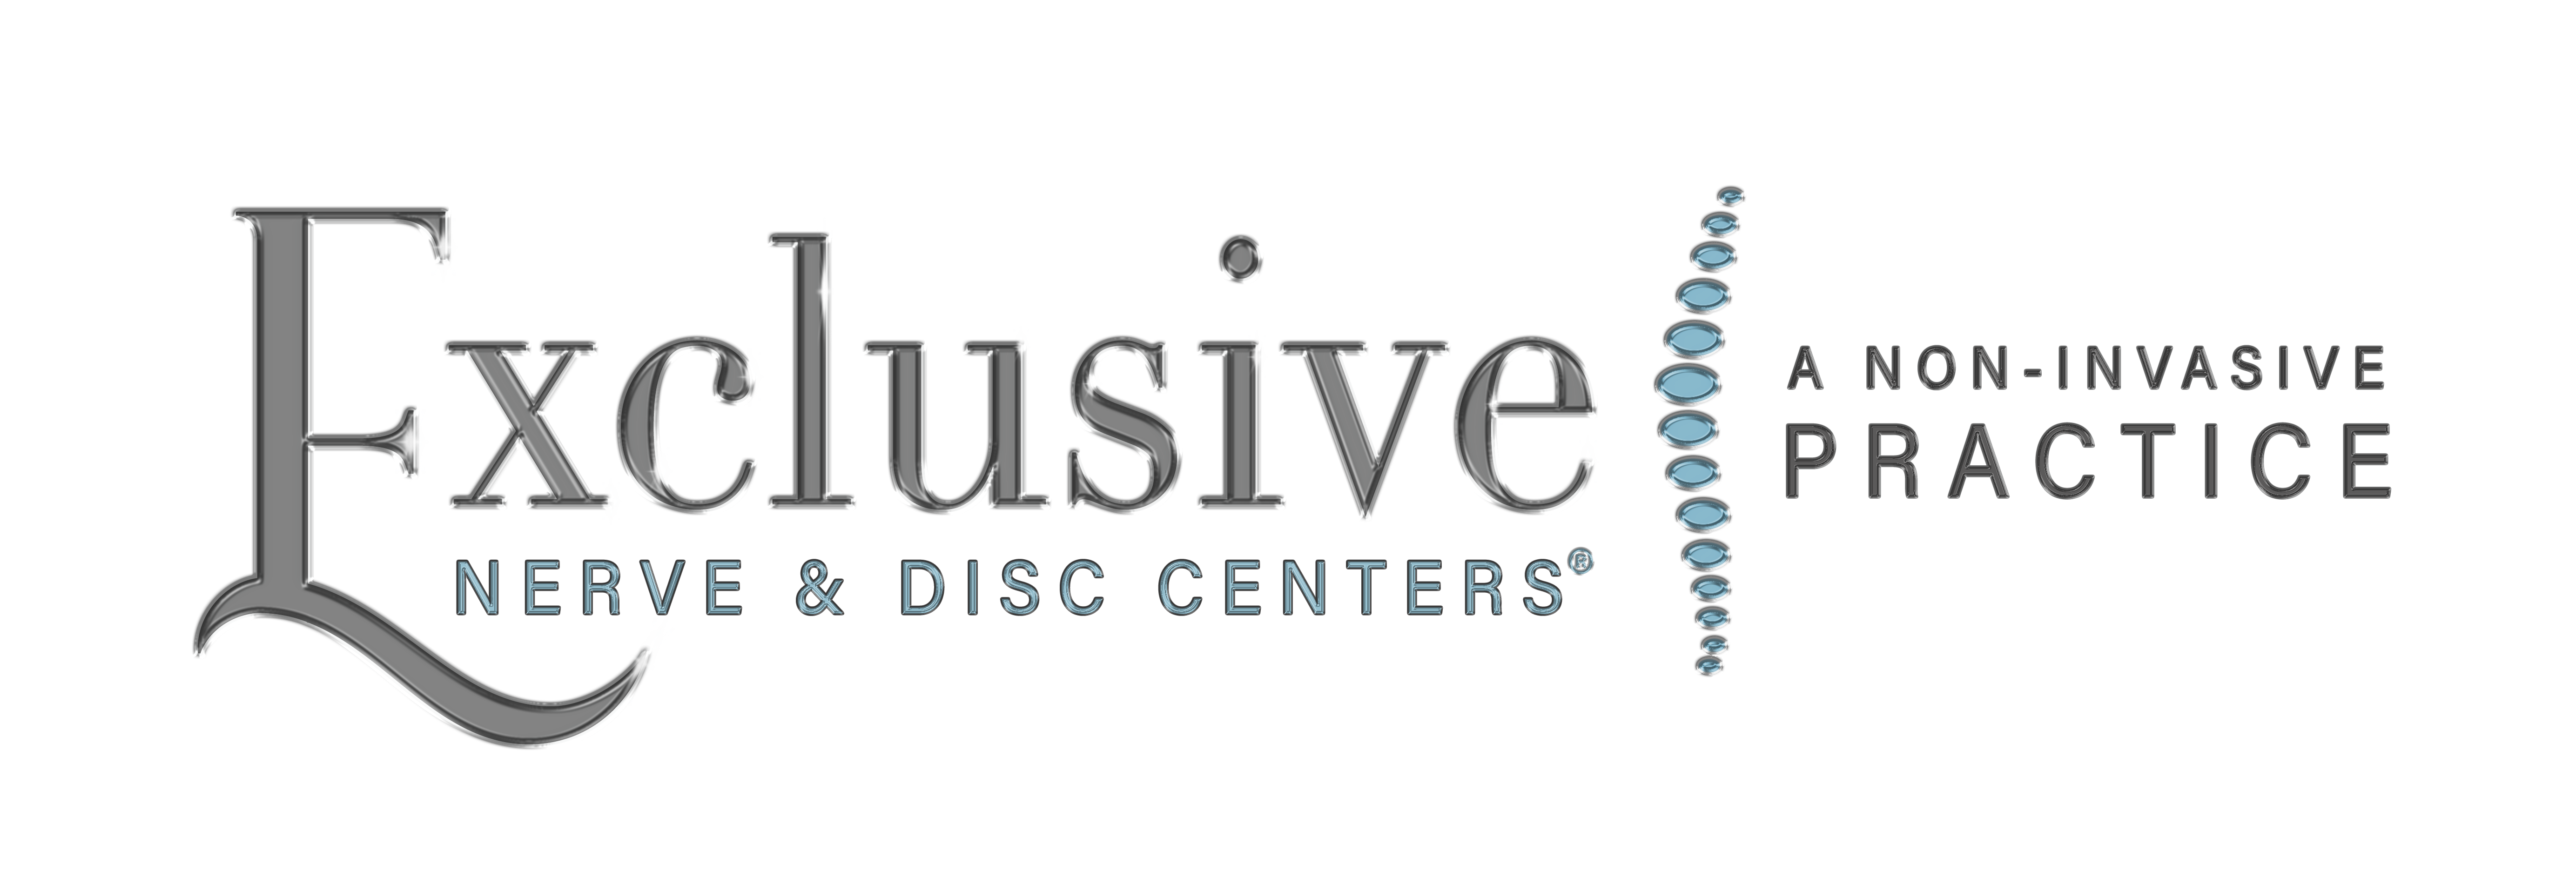 Exclusive Nerve & Disc Center